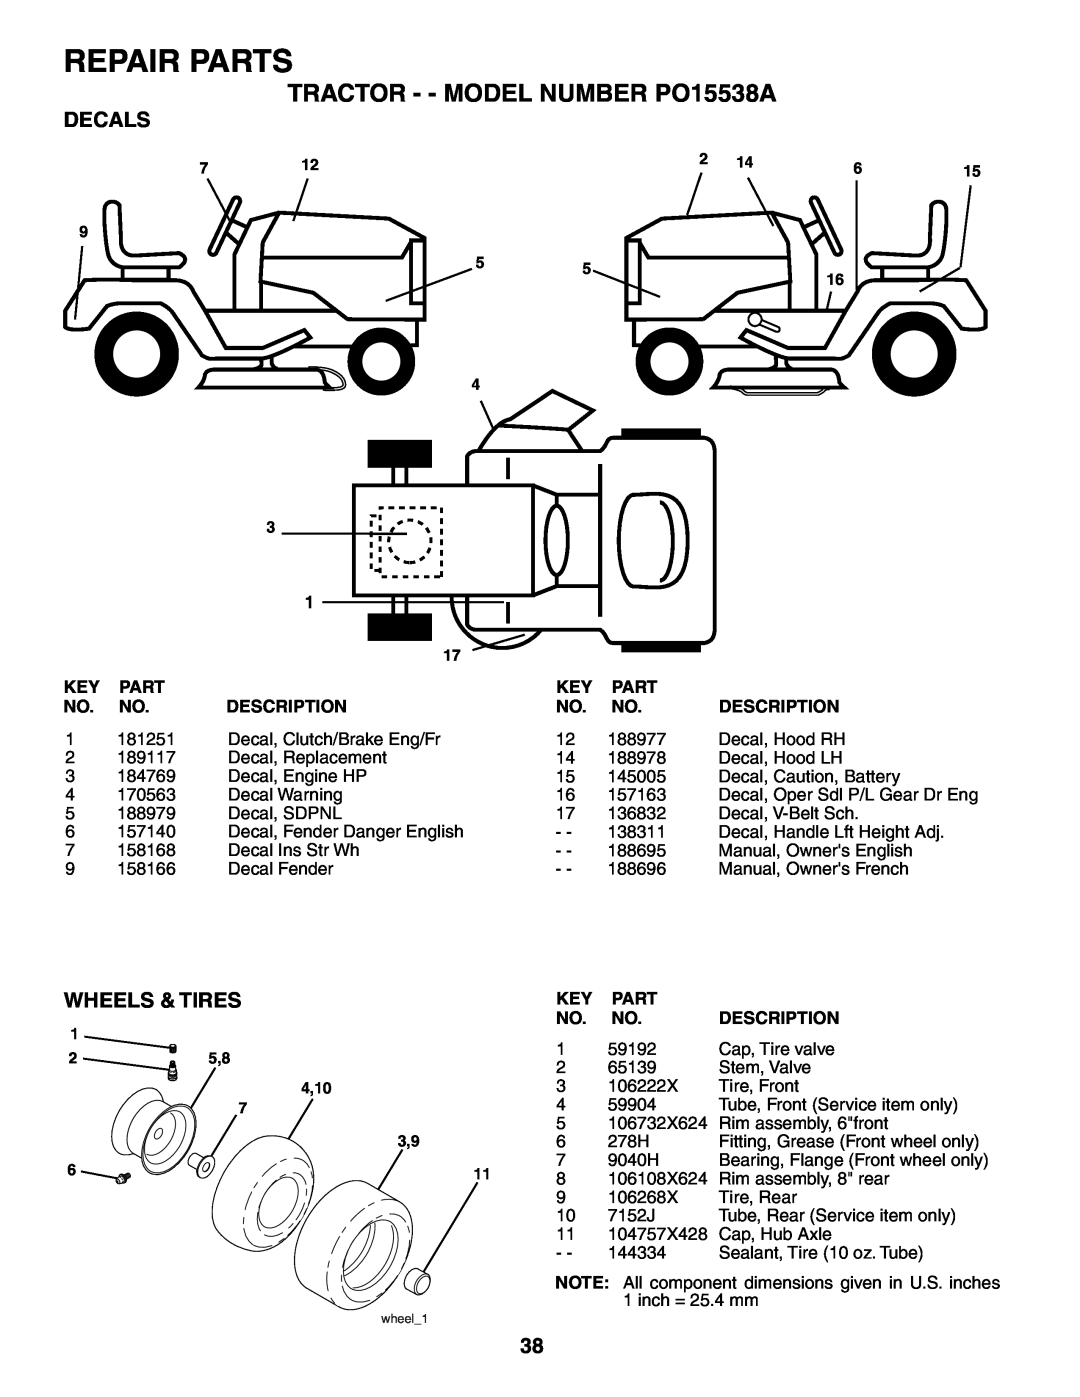 Poulan 188695 manual Decals, Wheels & Tires, Repair Parts, TRACTOR - - MODEL NUMBER PO15538A, Description 